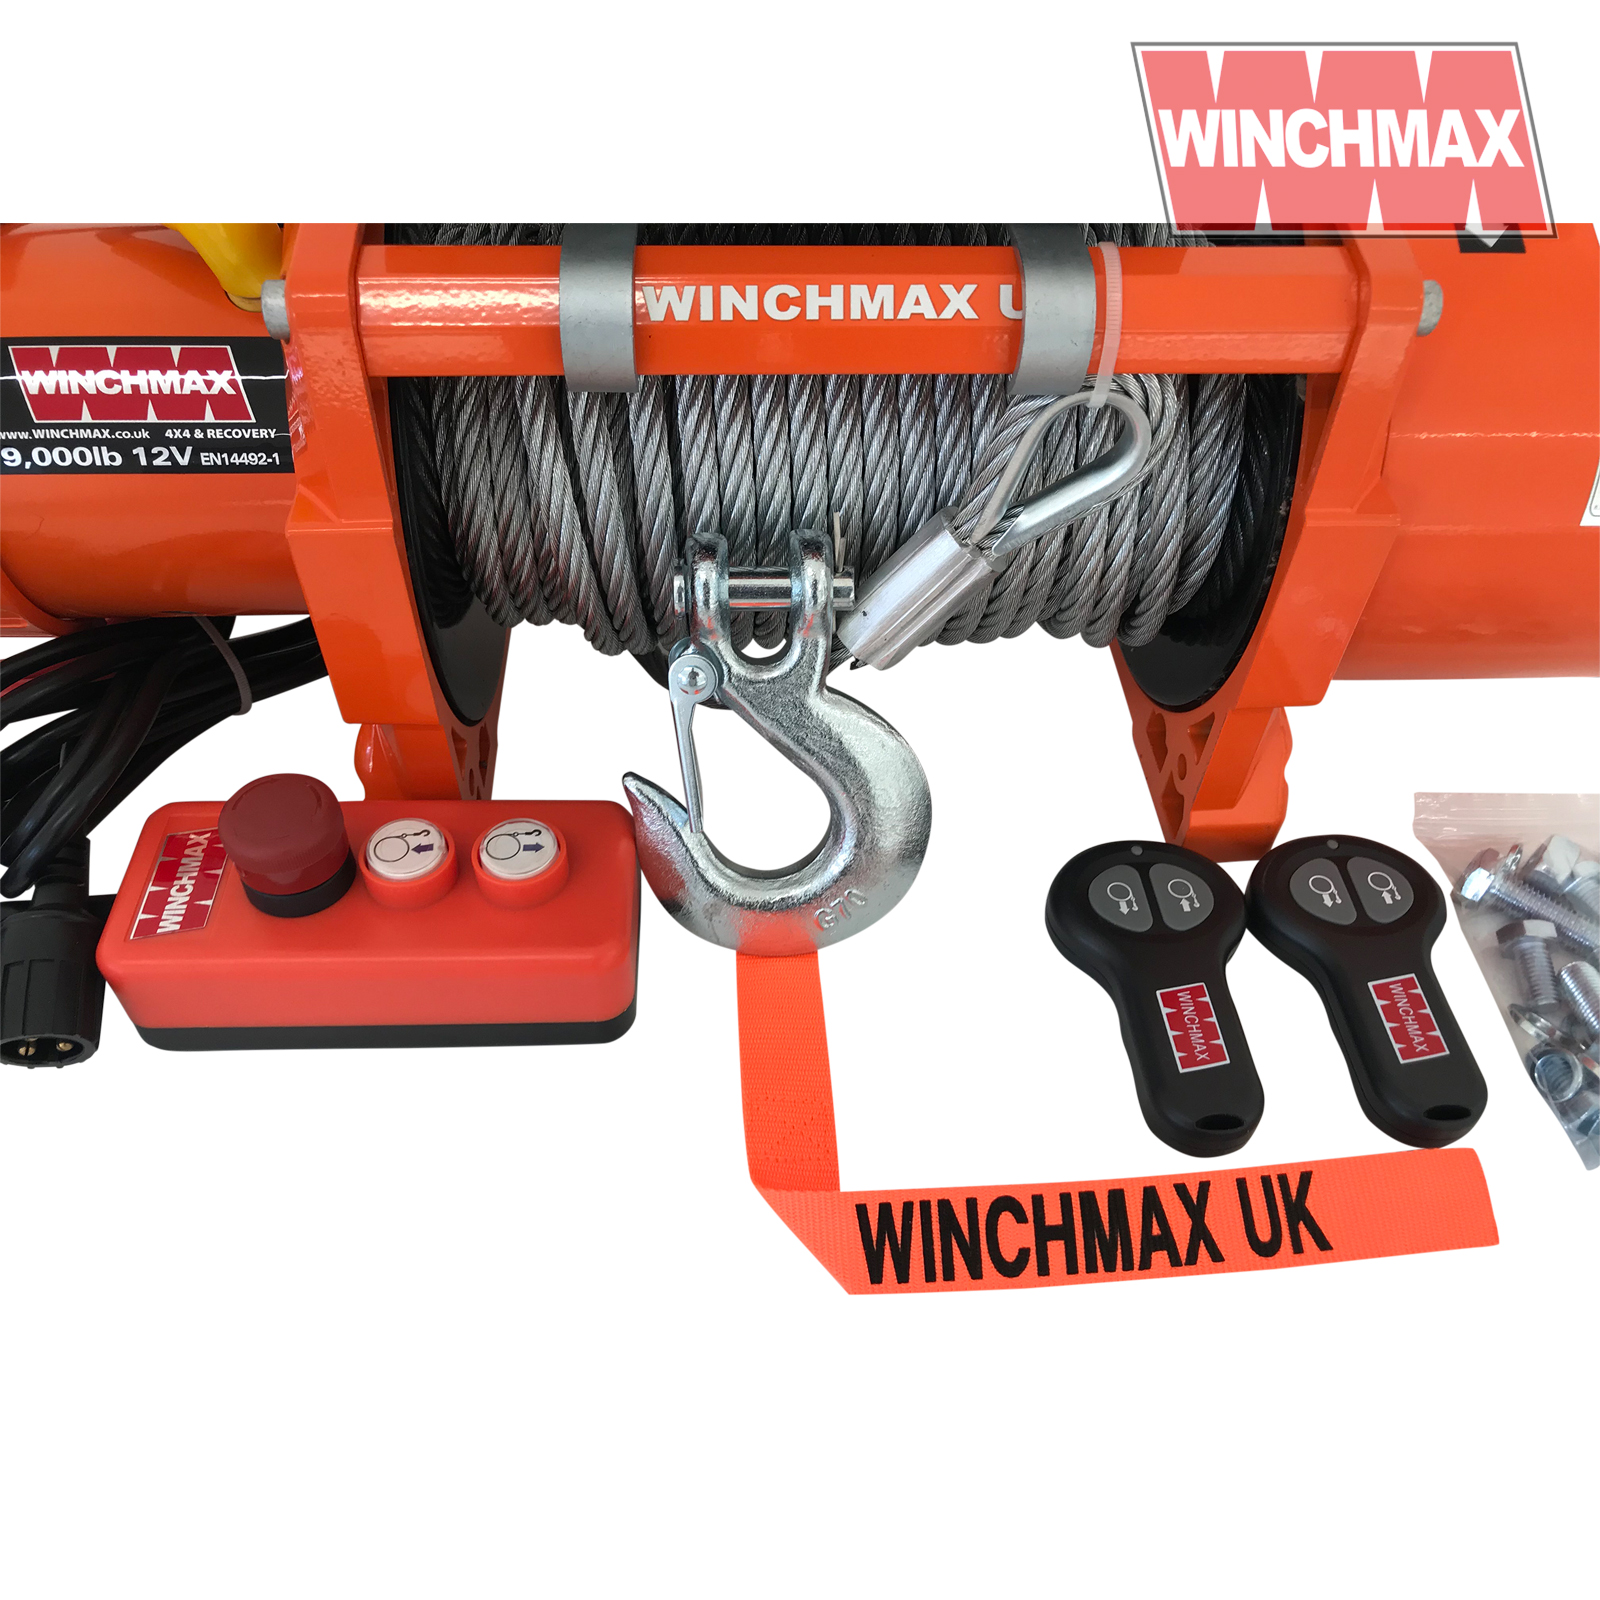 Winchmax 15000lb 12v Winch EN14492 Compliant